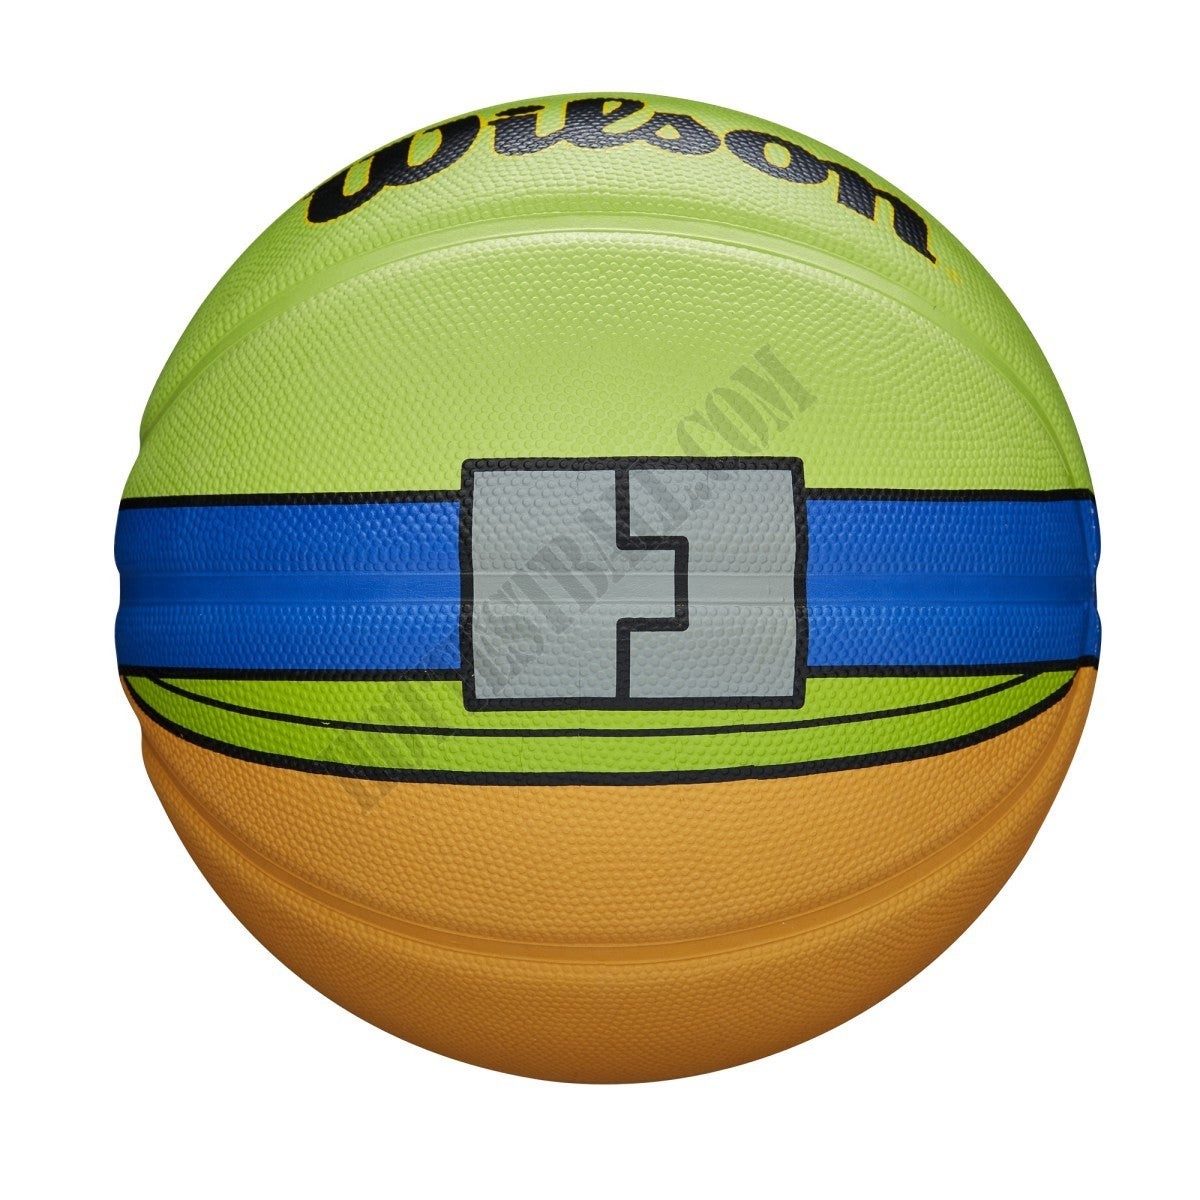 Hebru Brantley Flyboy Limited Edition Basketball - Wilson Discount Store - -4